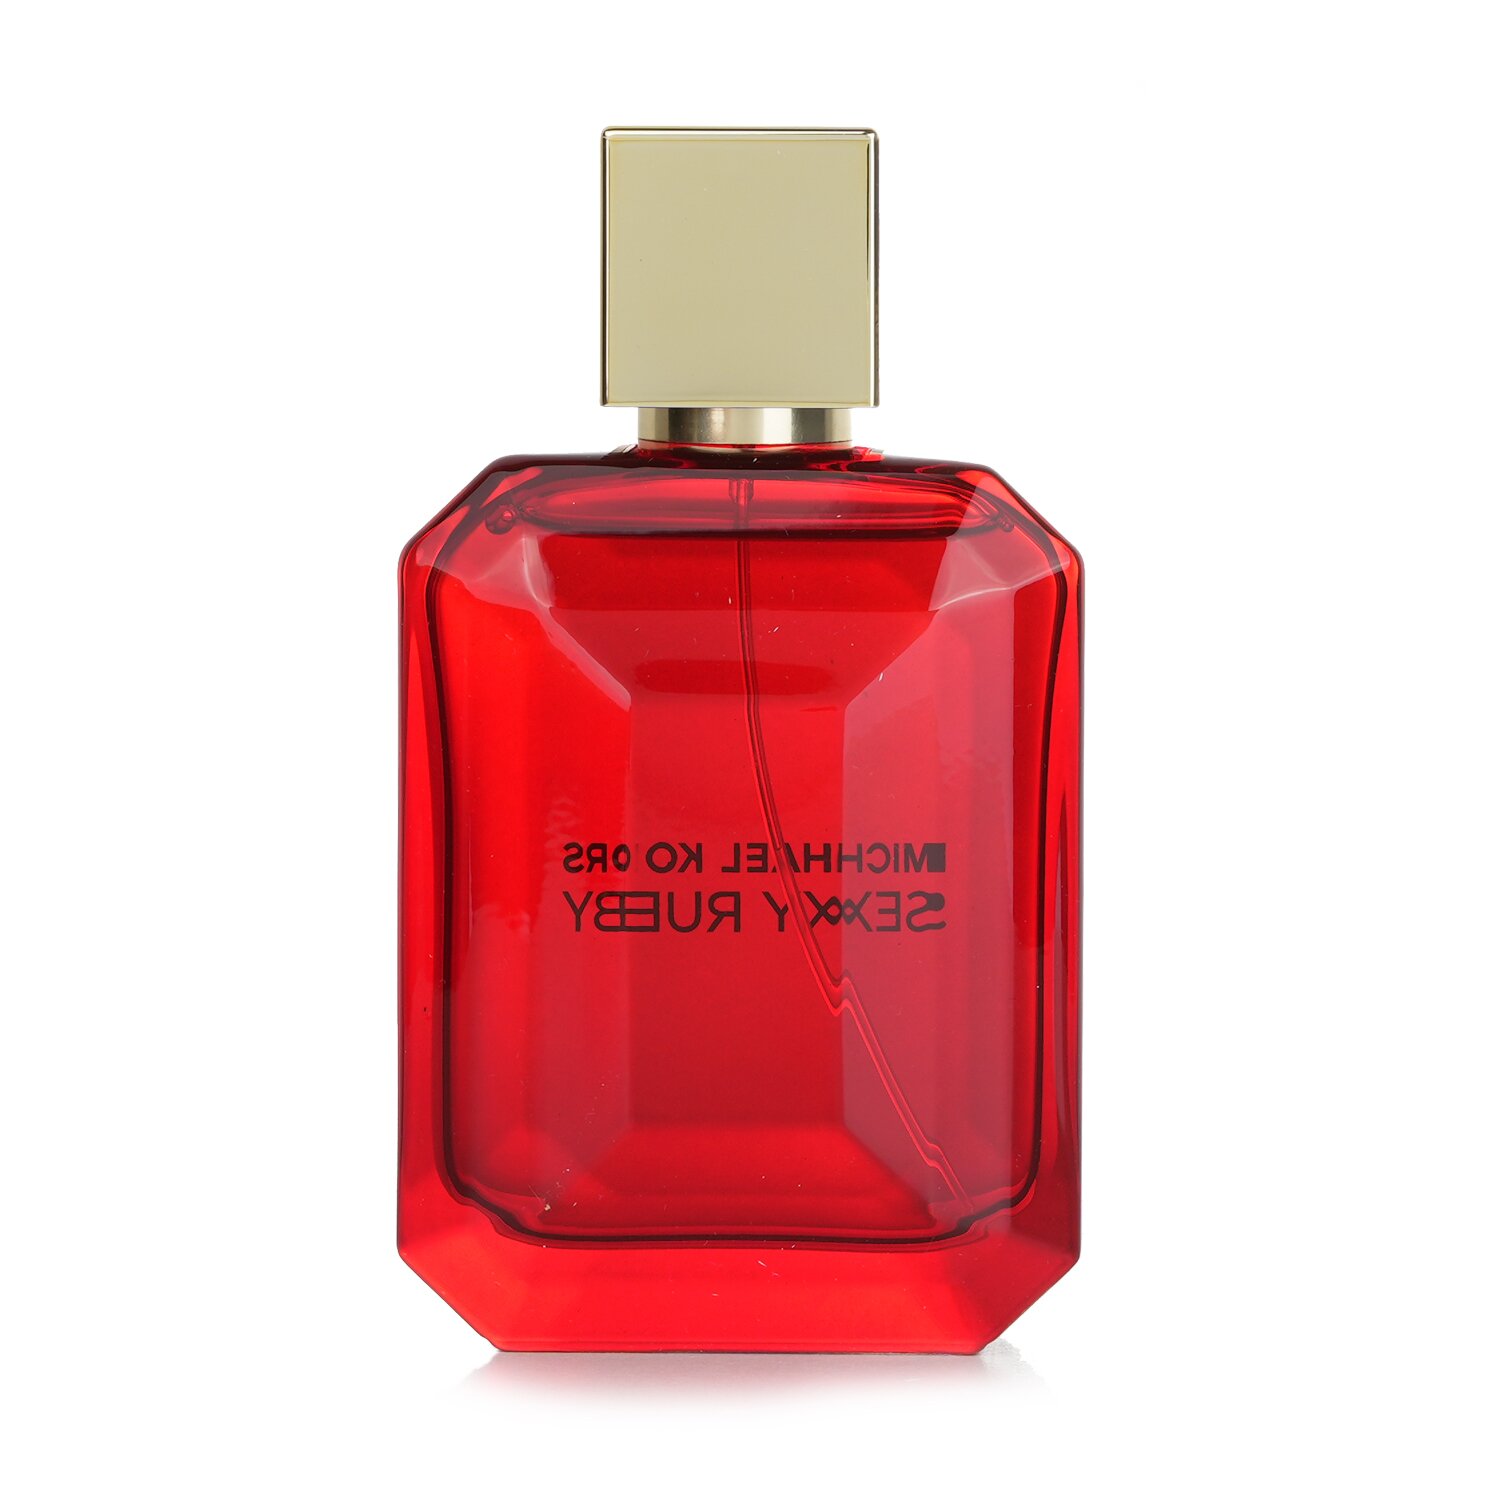 Michael Kors Sexy Ruby Eau De Parfum Spray 100ml/3.4oz